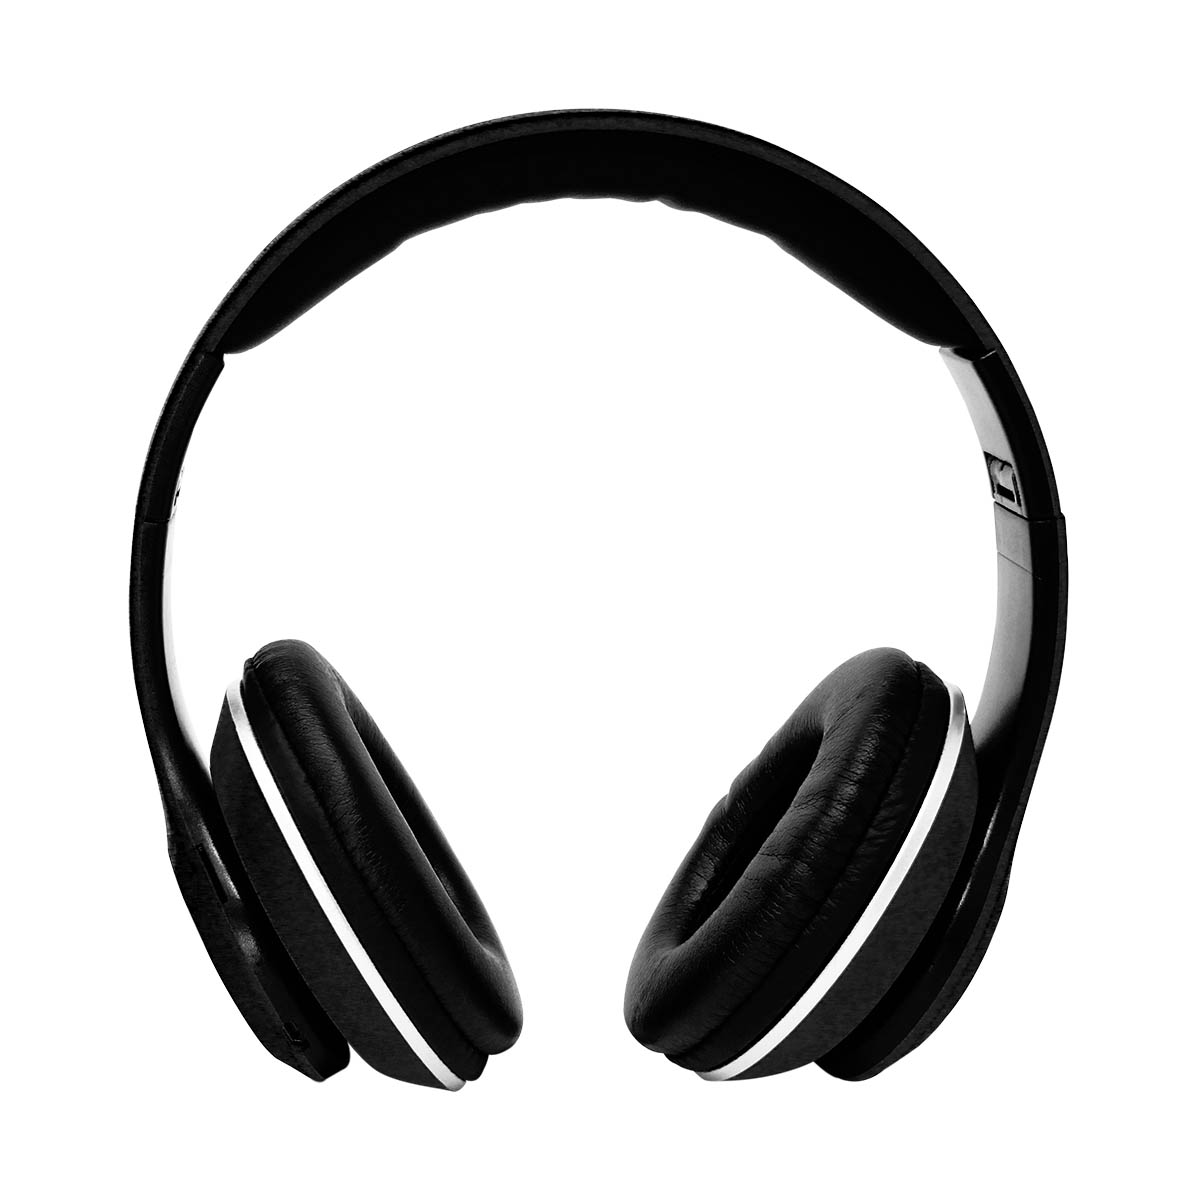 AUDIFONOS OVER-EAR BLUETOOTH NBH-01 SONIDO HI-FI 3.5MM RADIO FM MICRO SD 3.5MML MANOS LIBRES RUBBERIZED NEGRO -